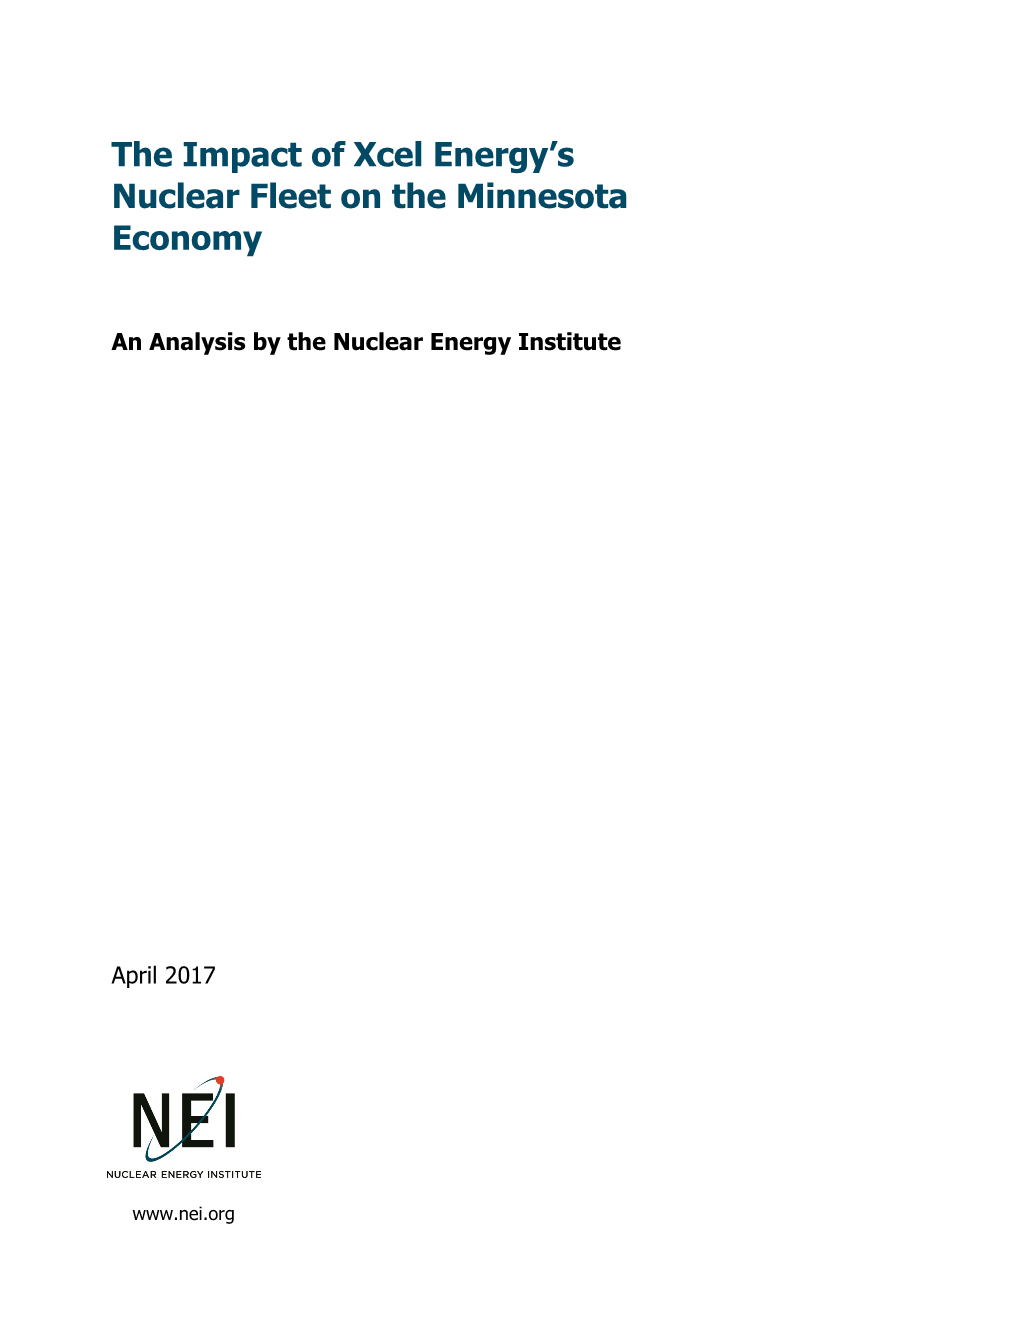 The Impact of Xcel Energy's Nuclear Fleet on the Minnesota Economy